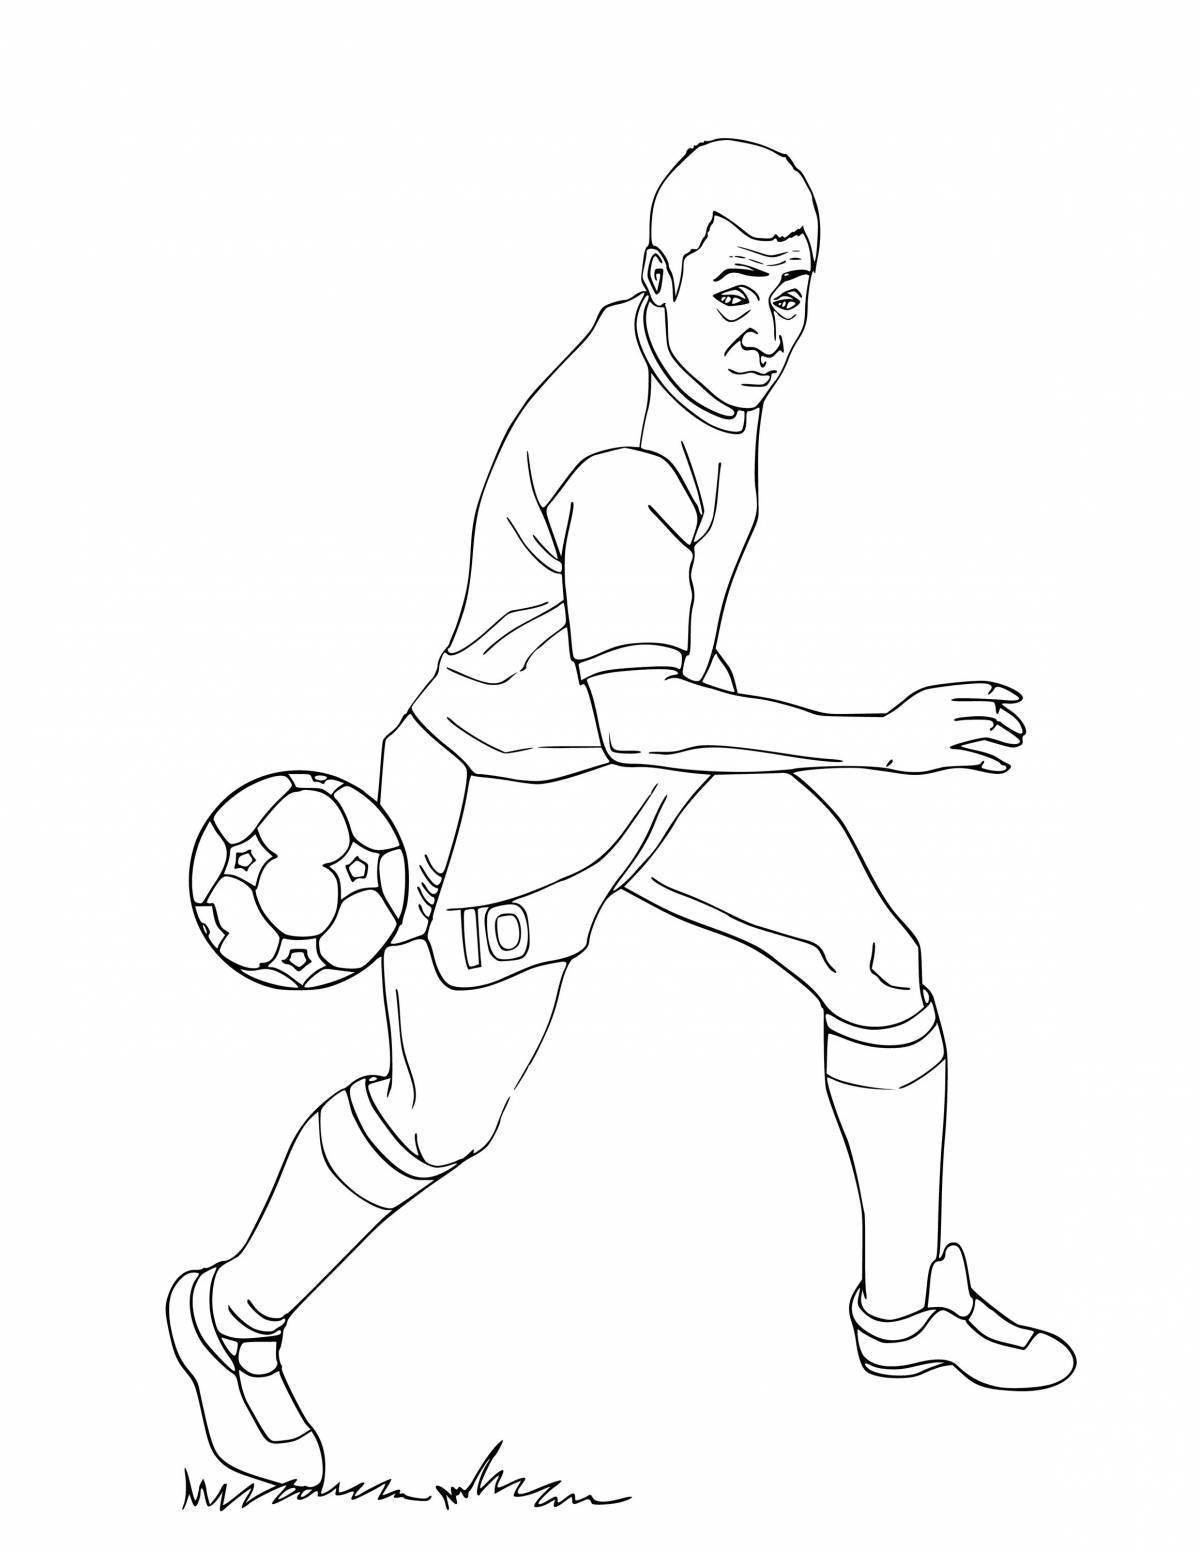 Pele soccer player #4